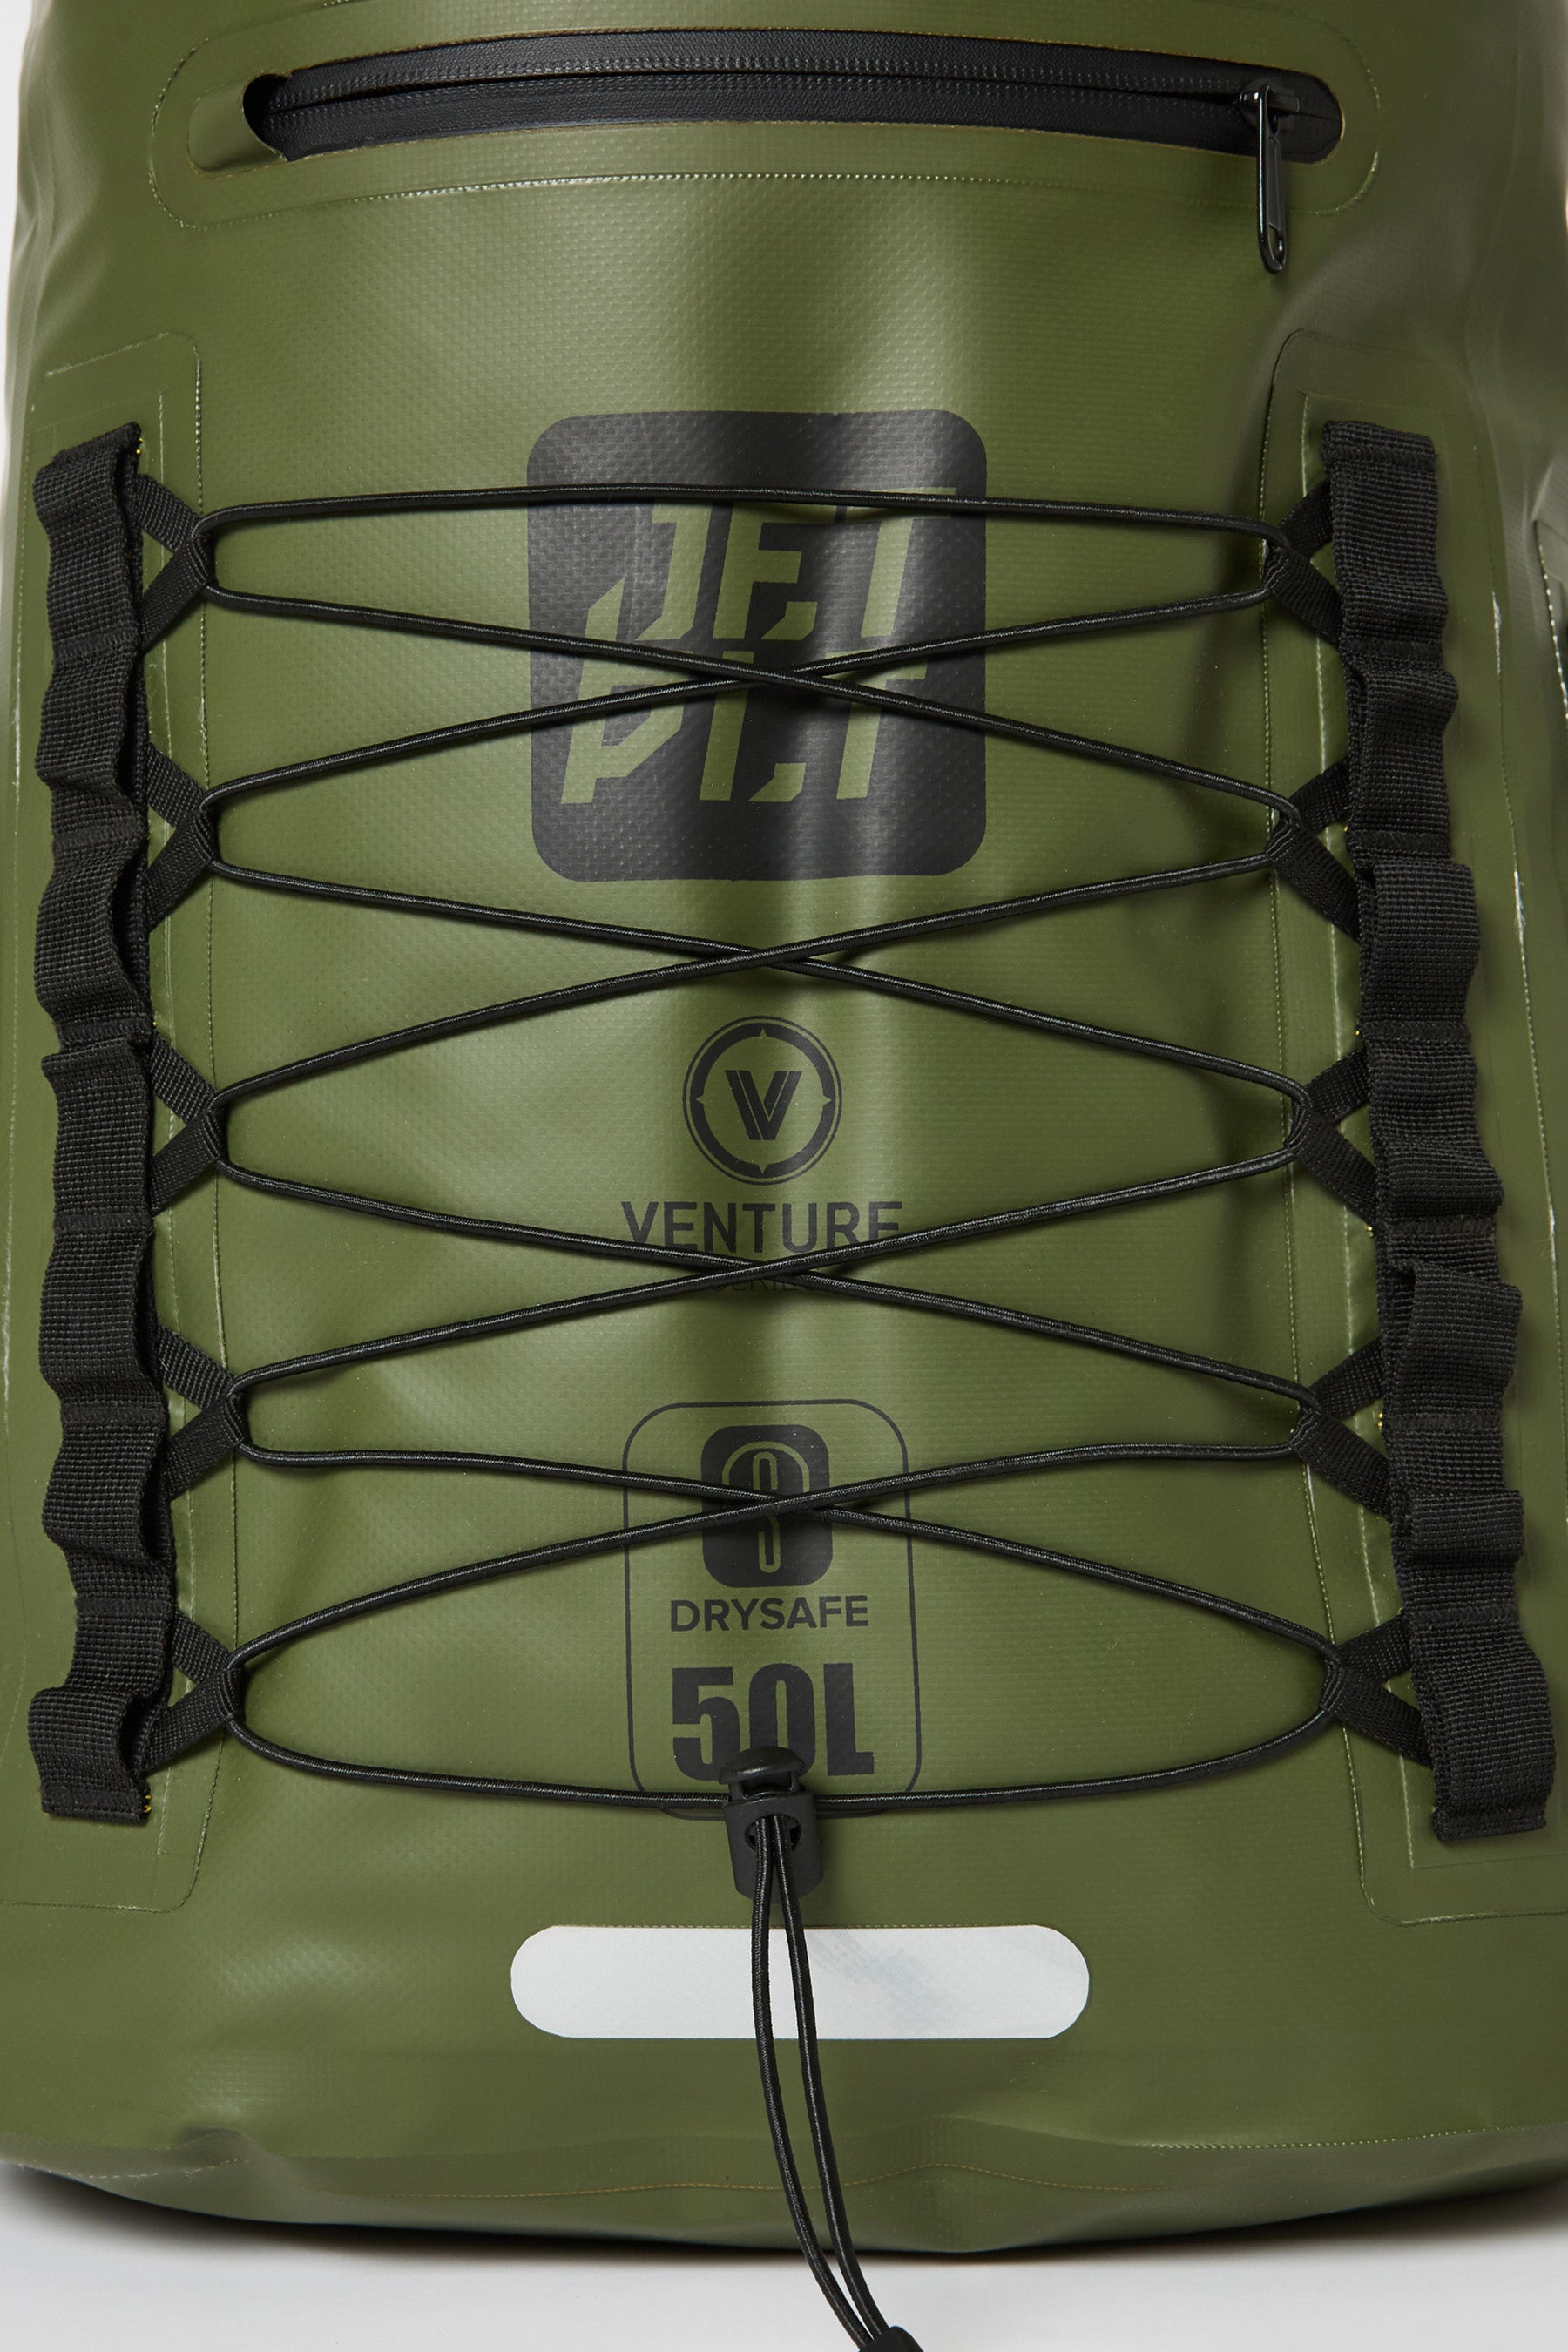 Jetpilot Venture 50l Waterproof Bag - Black/Sage